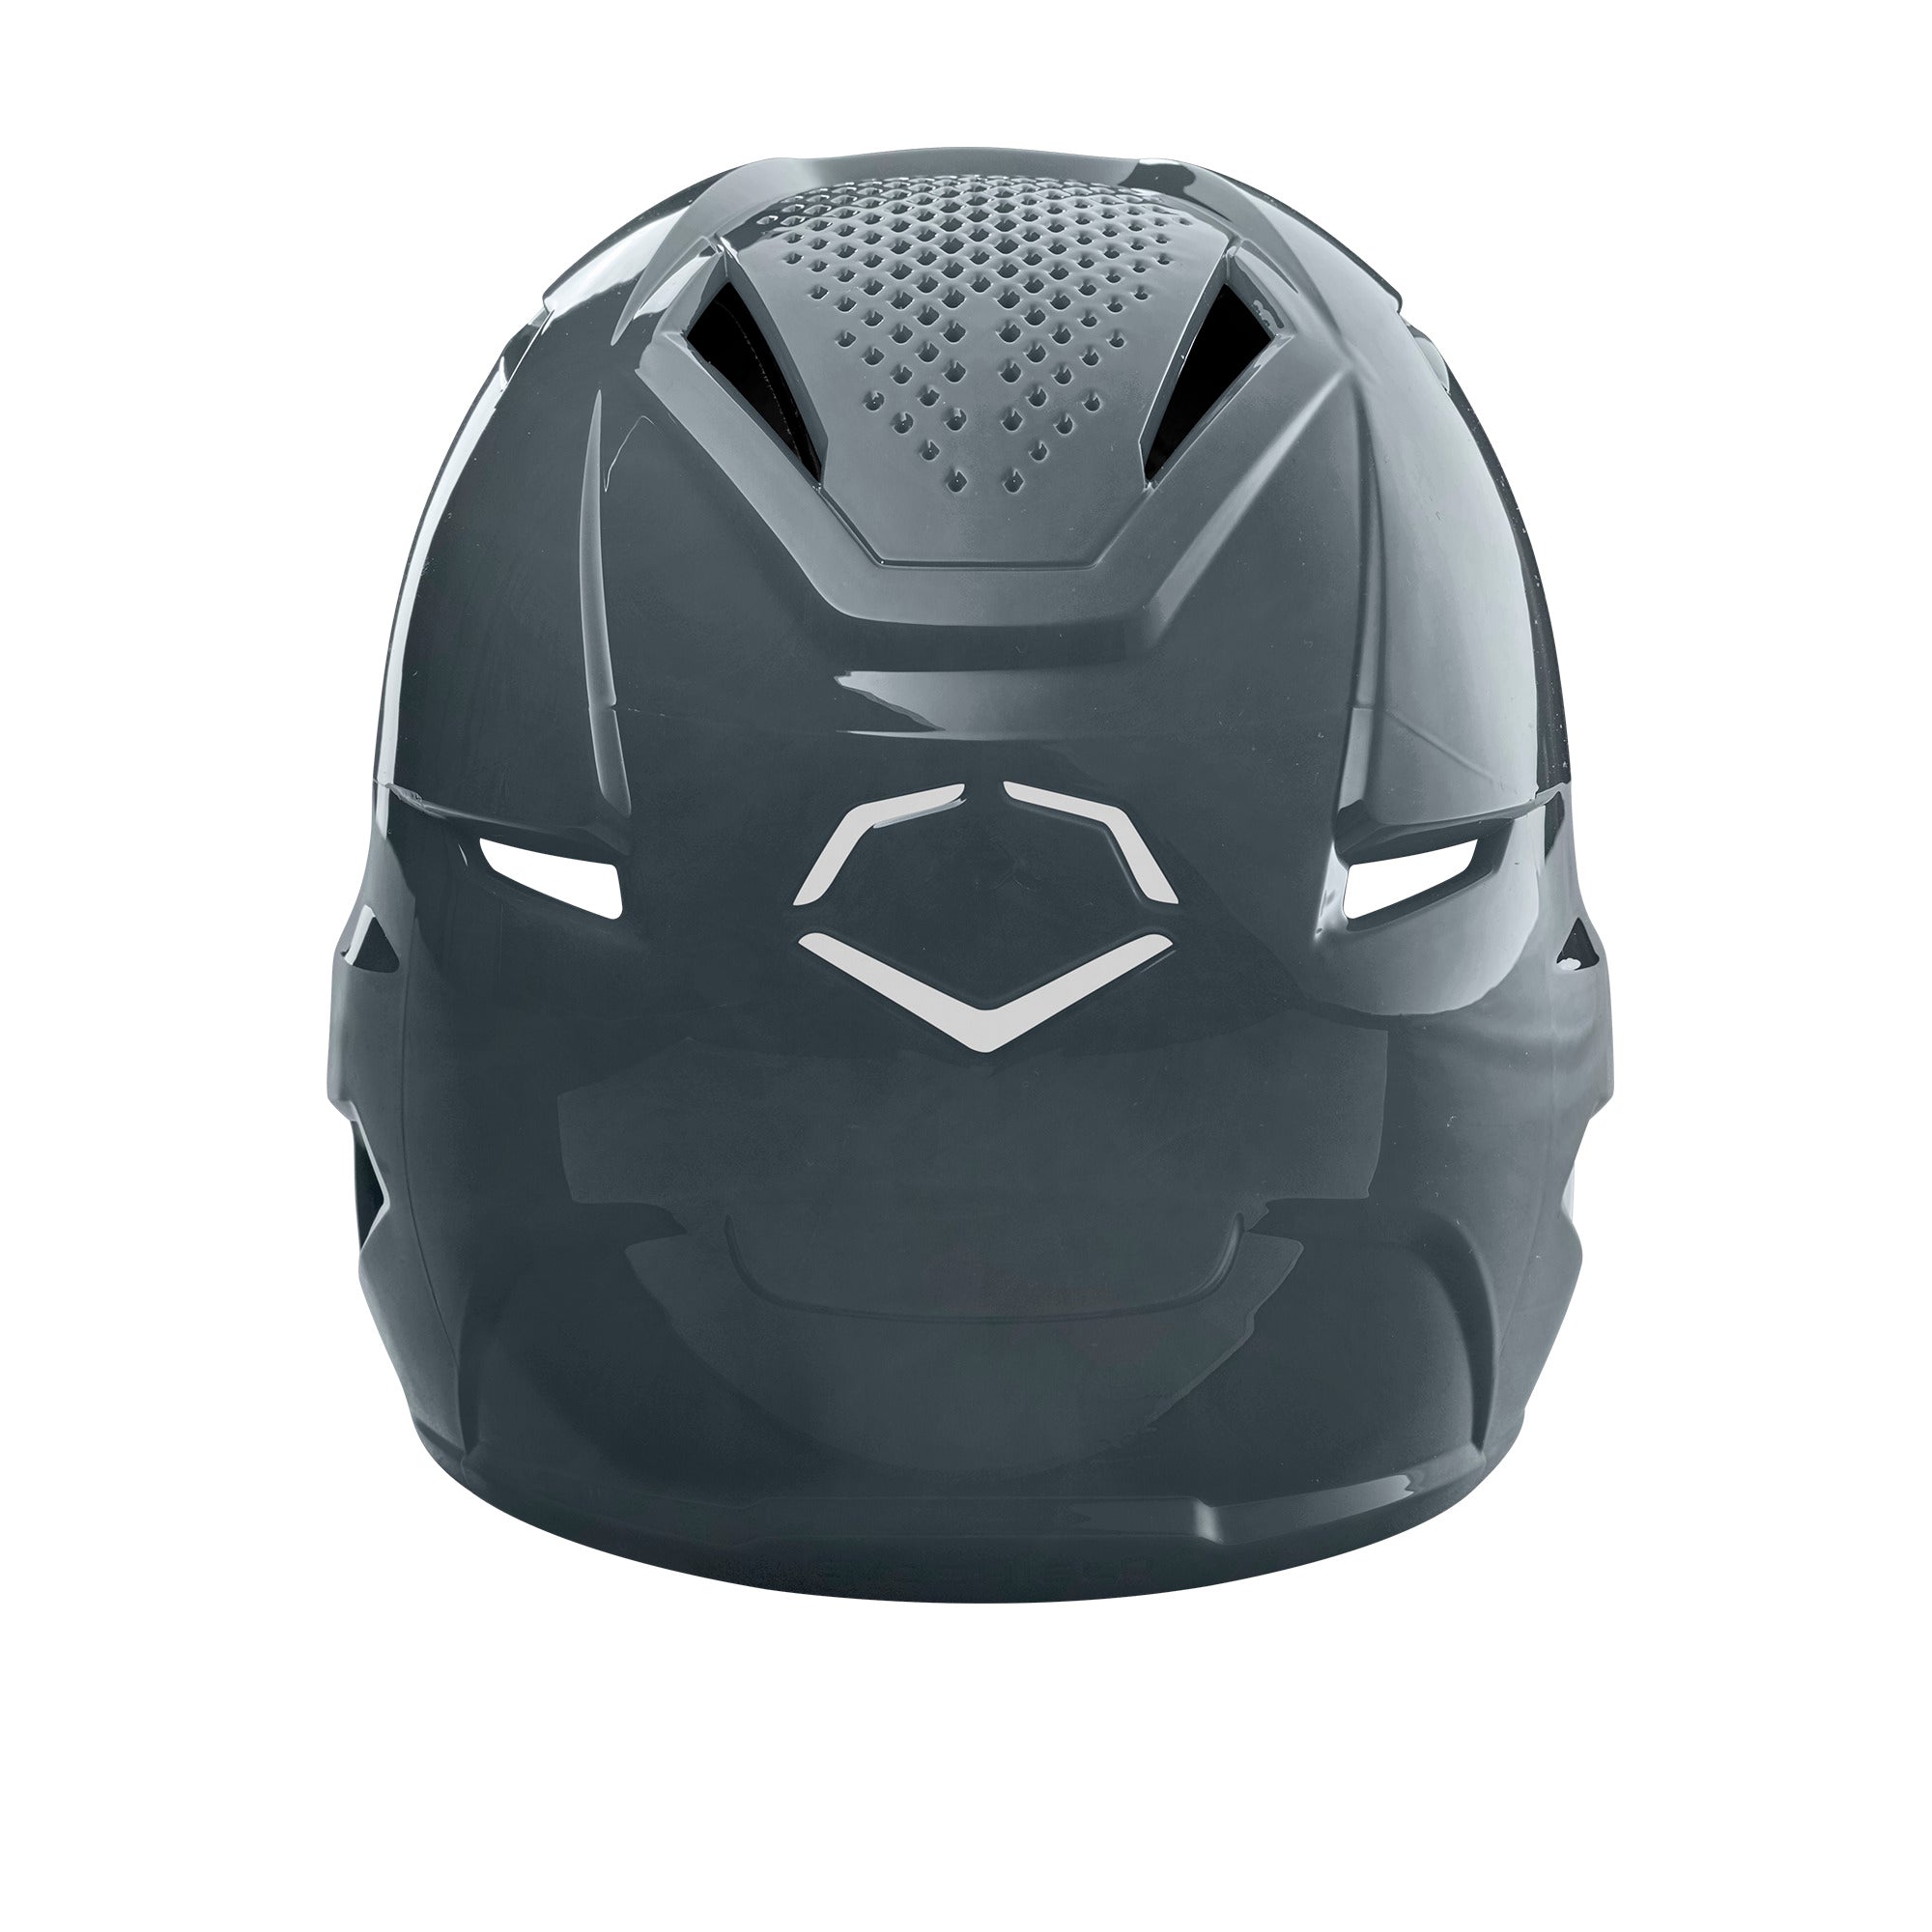 Evoshield XVT Batting Helmet - High Gloss Finish Charcoal